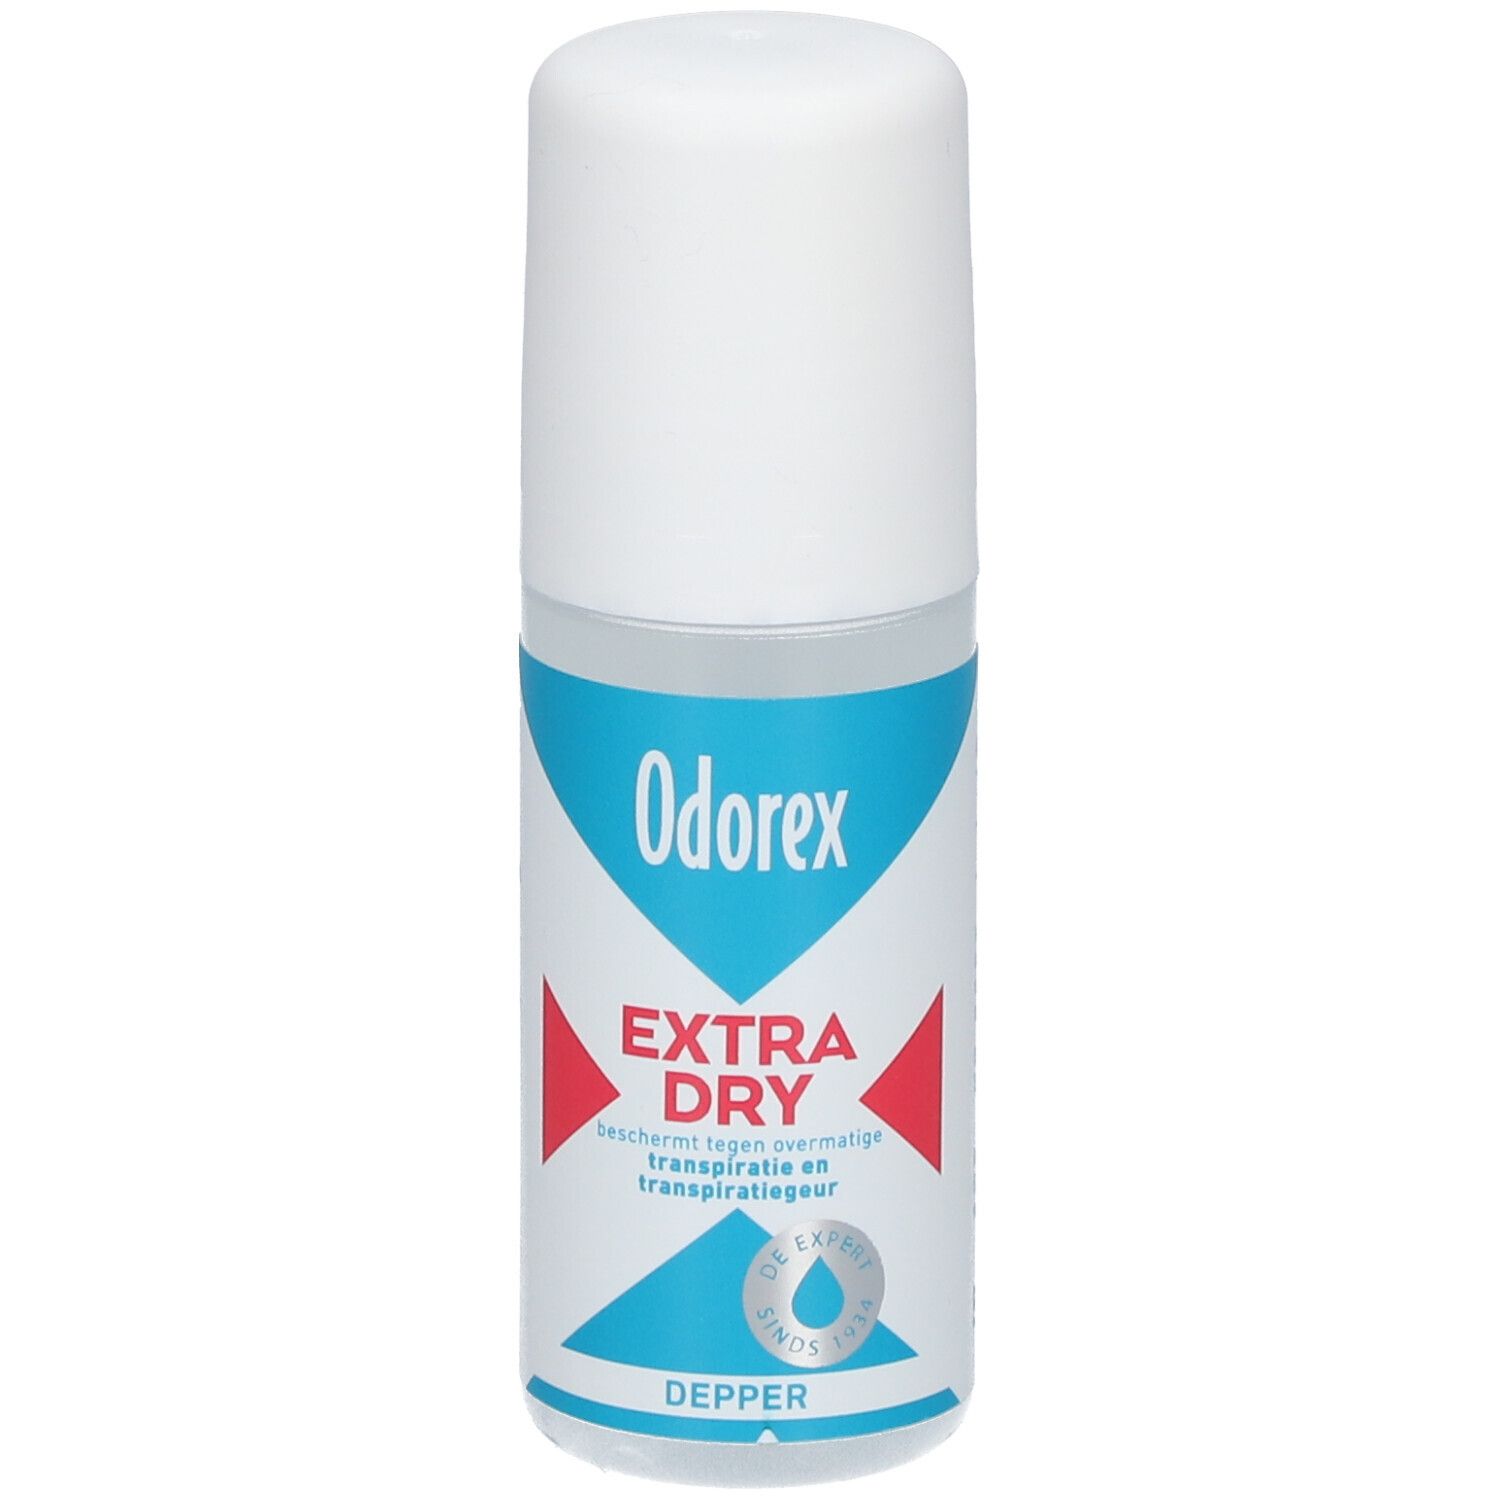 Odorex Extra Dry Depper Deo Roll-On